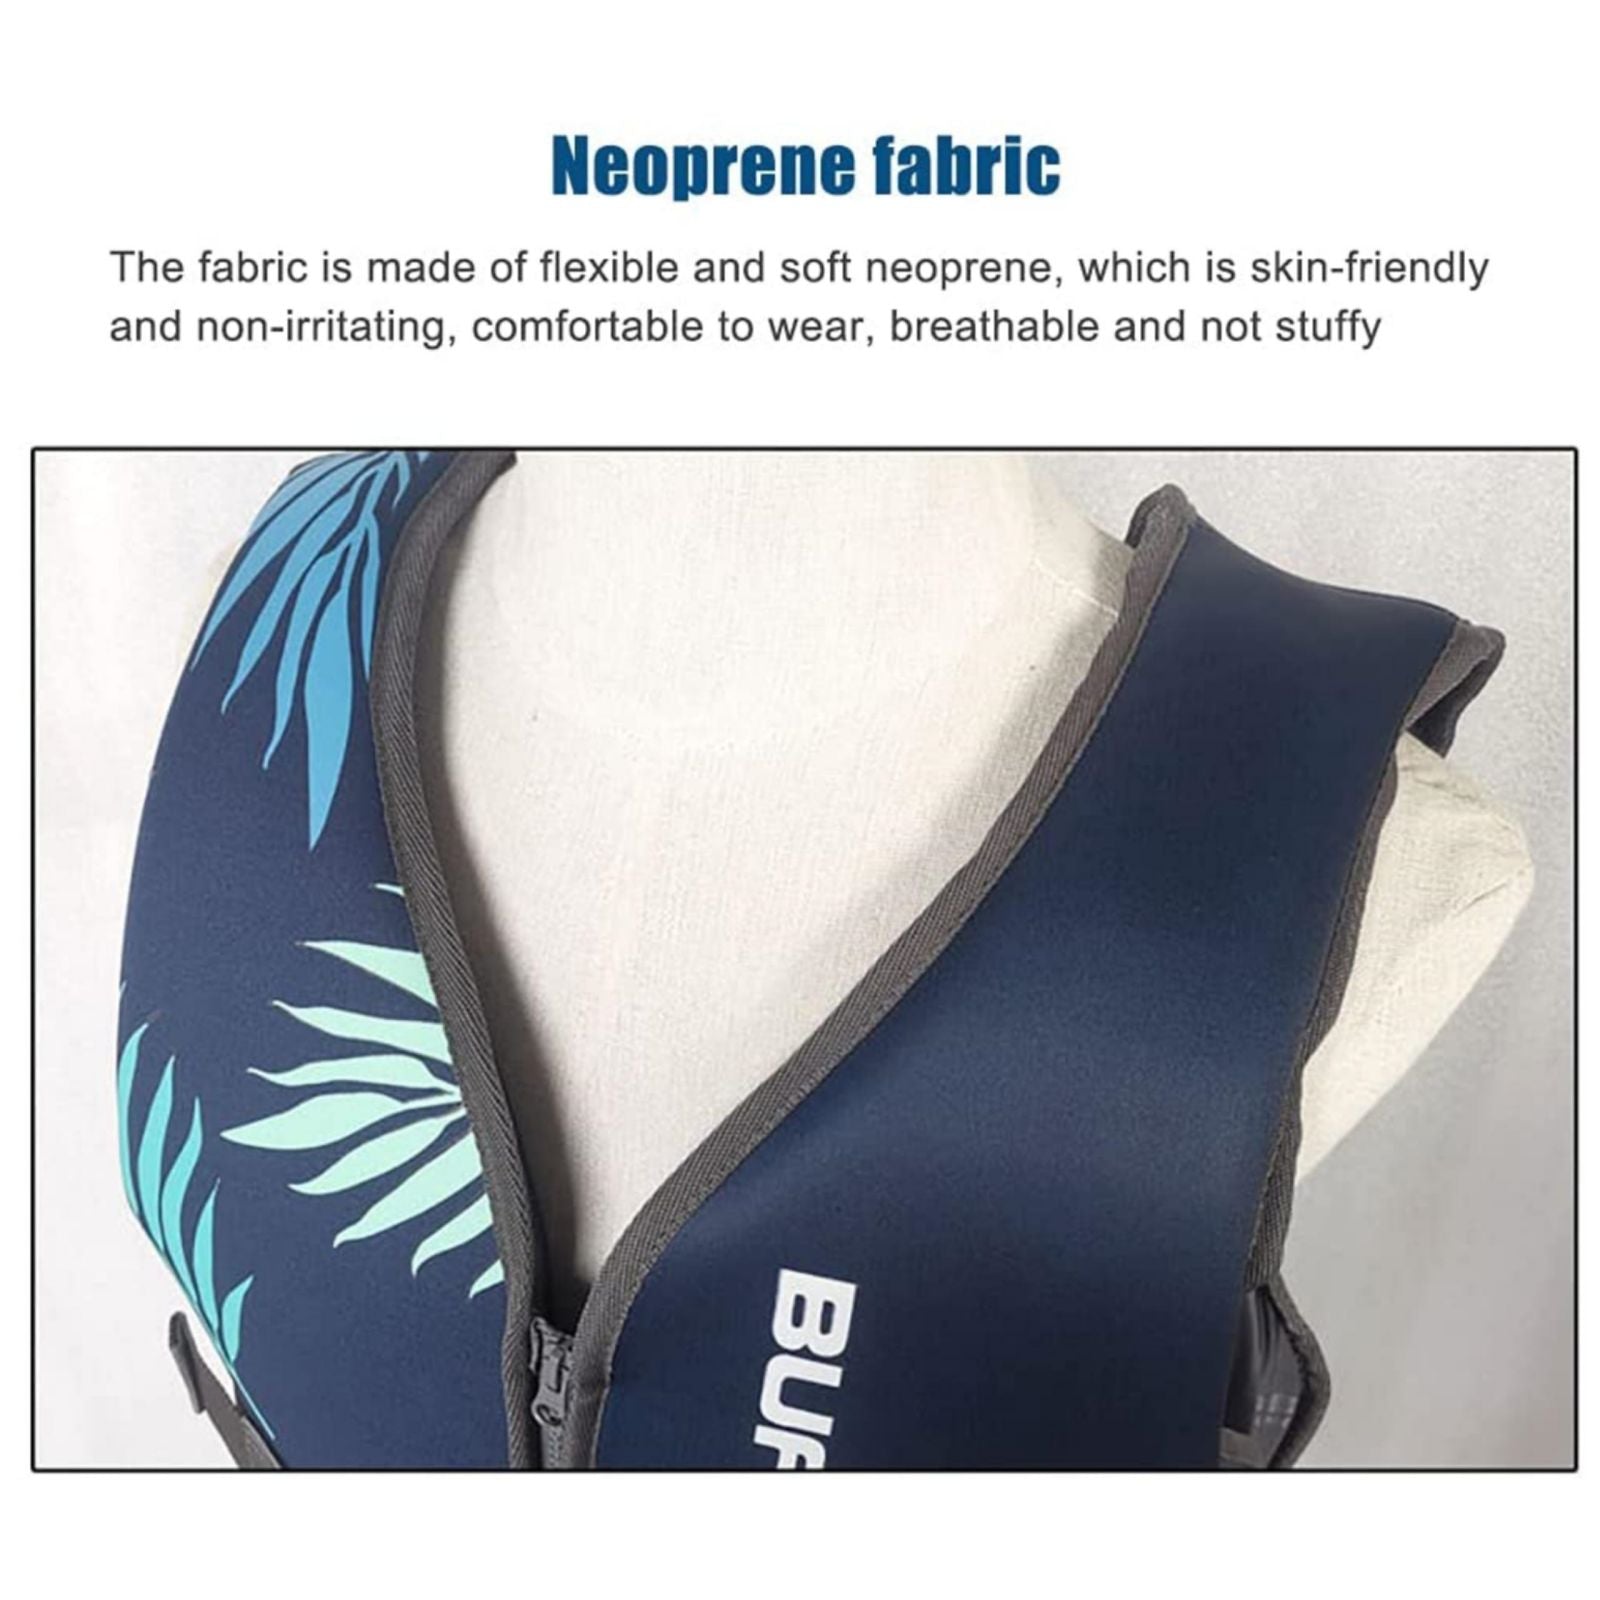 Life Jacket for Unisex Adjustable Safety Breathable Life Vest for Men Women(Blue-S) - SILBERSHELL